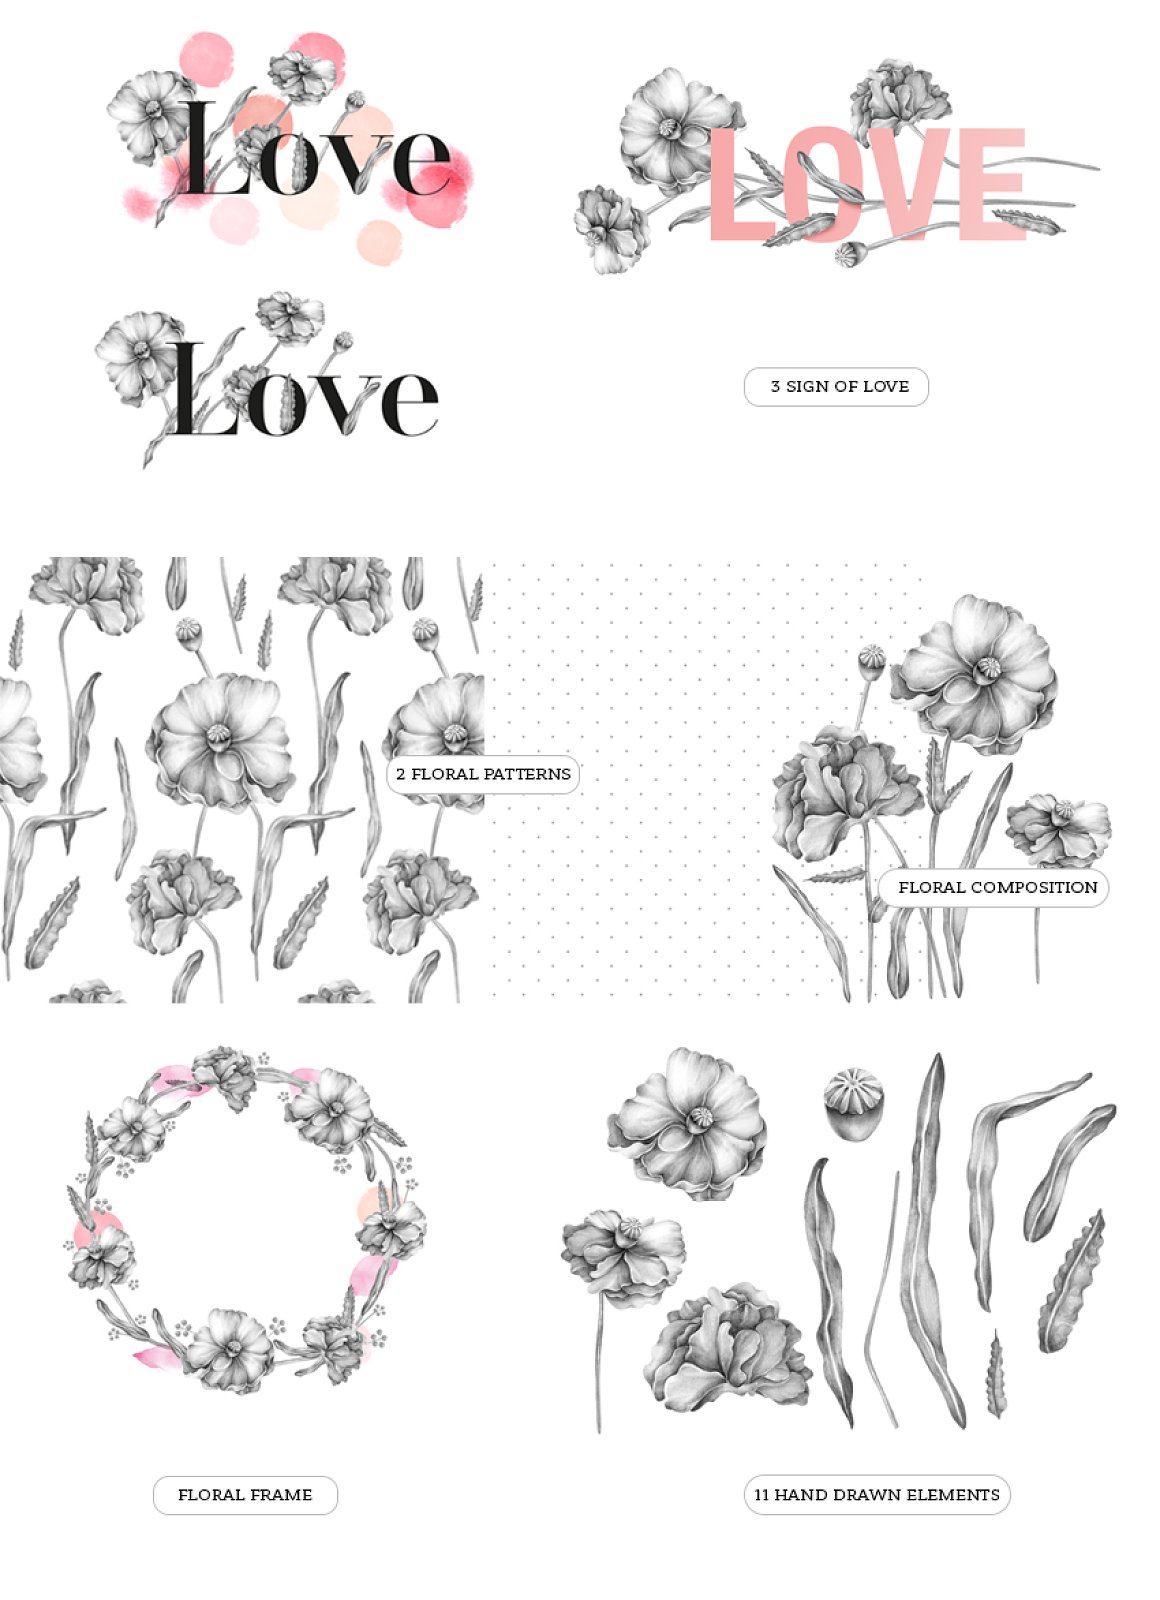 Diverse of floral illustrations.